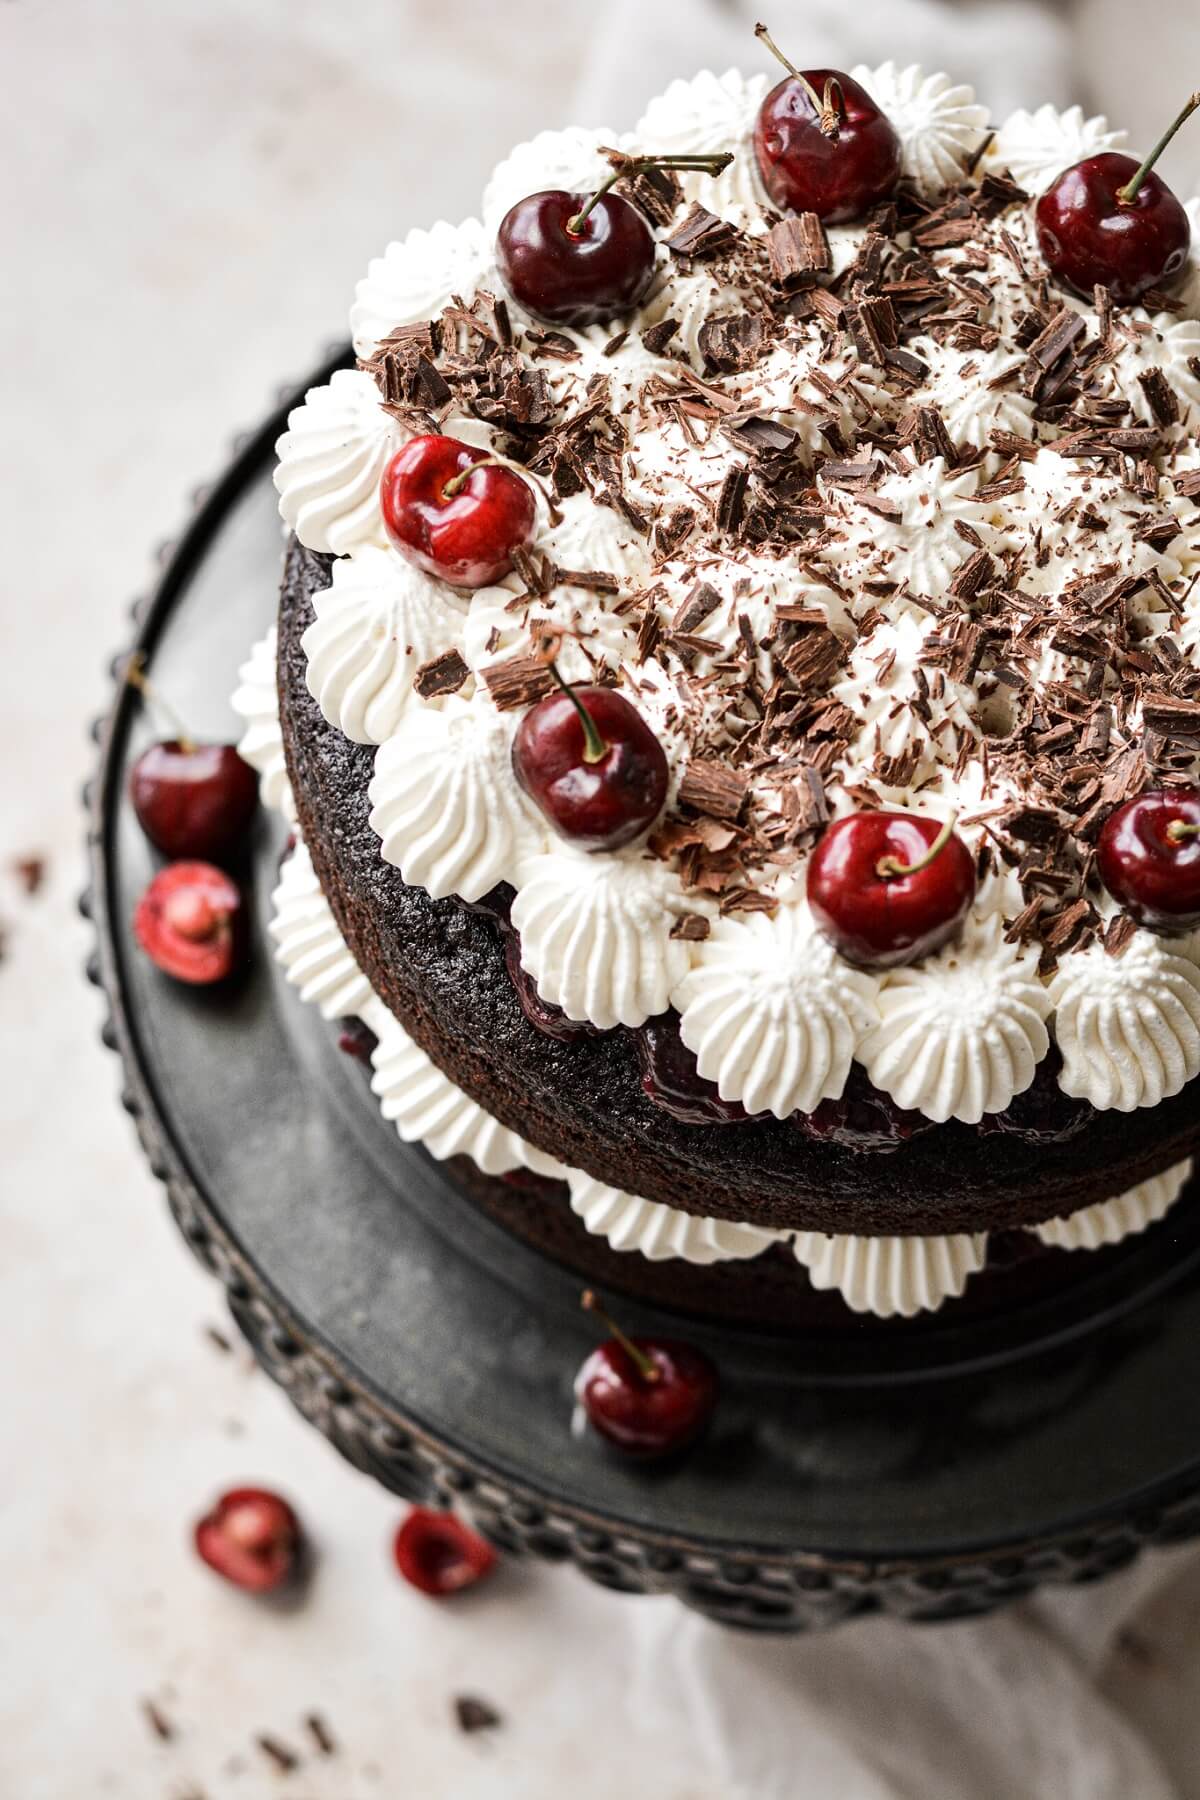 Black Forest Cake {A Classic Tasty Chocolate Cherry Cake}